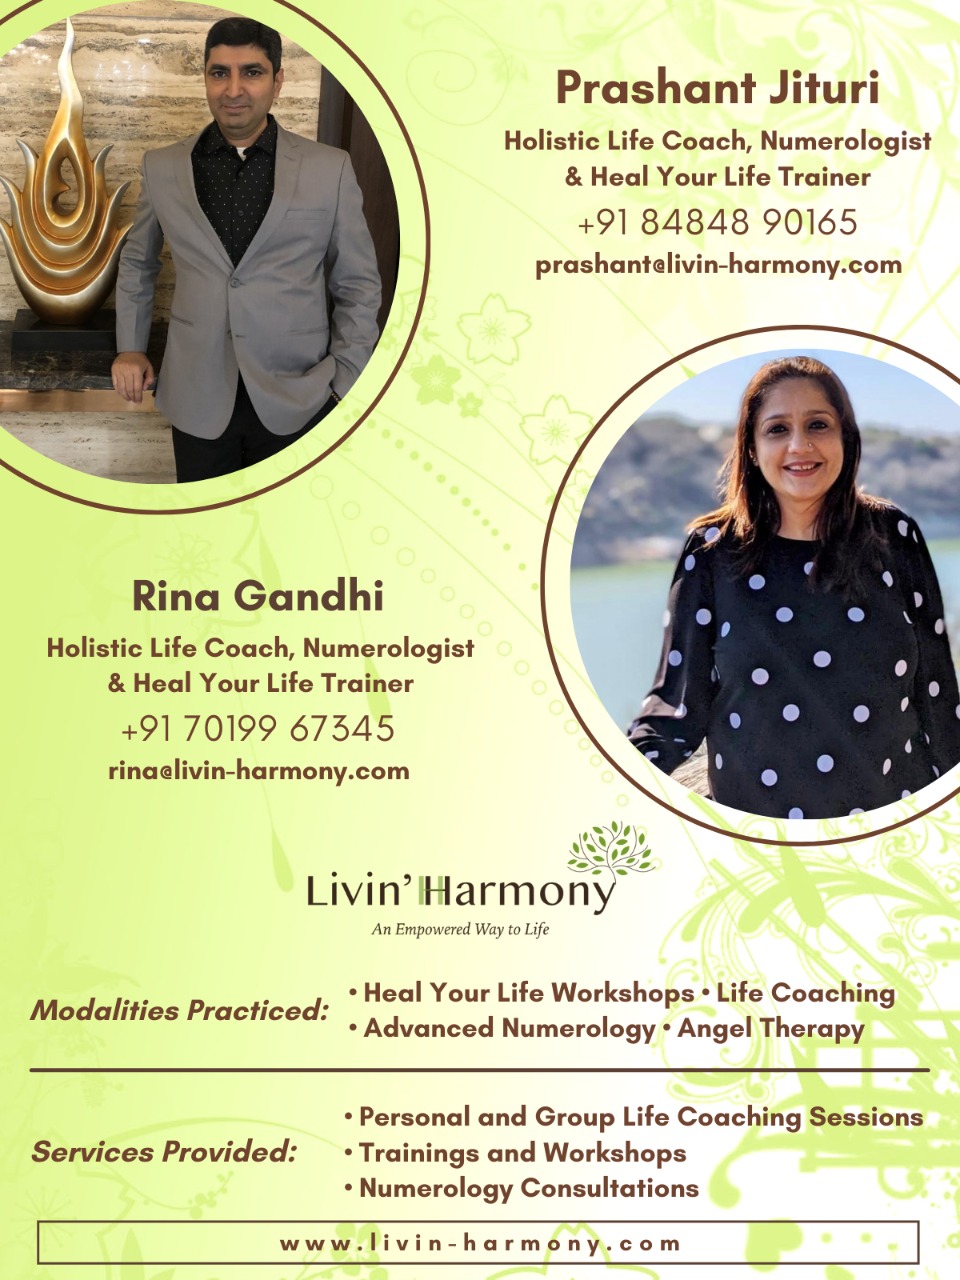 Life Coaching by Rina Gandhi and Prashant Jituri - Vijayawada